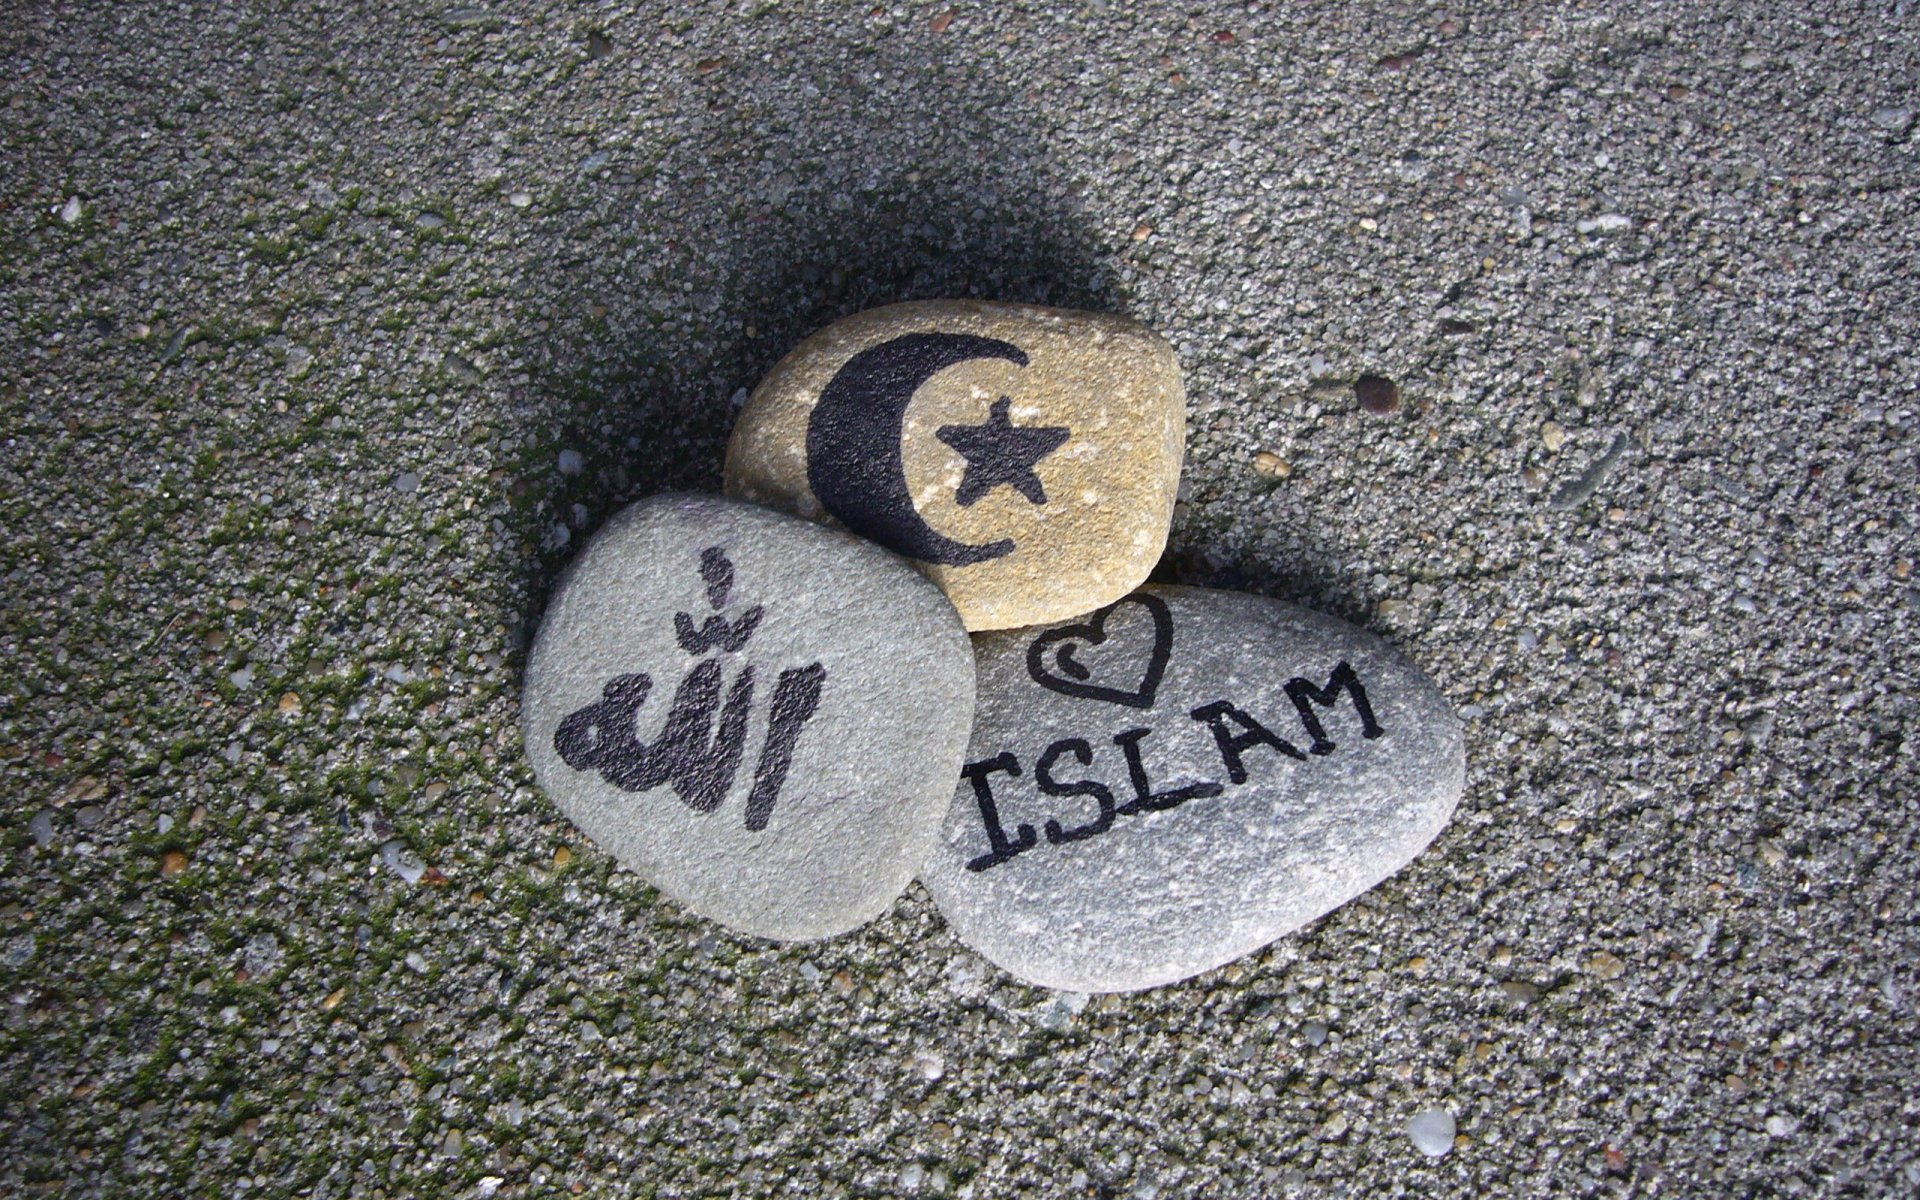 islam, Religion, Muslim Wallpaper